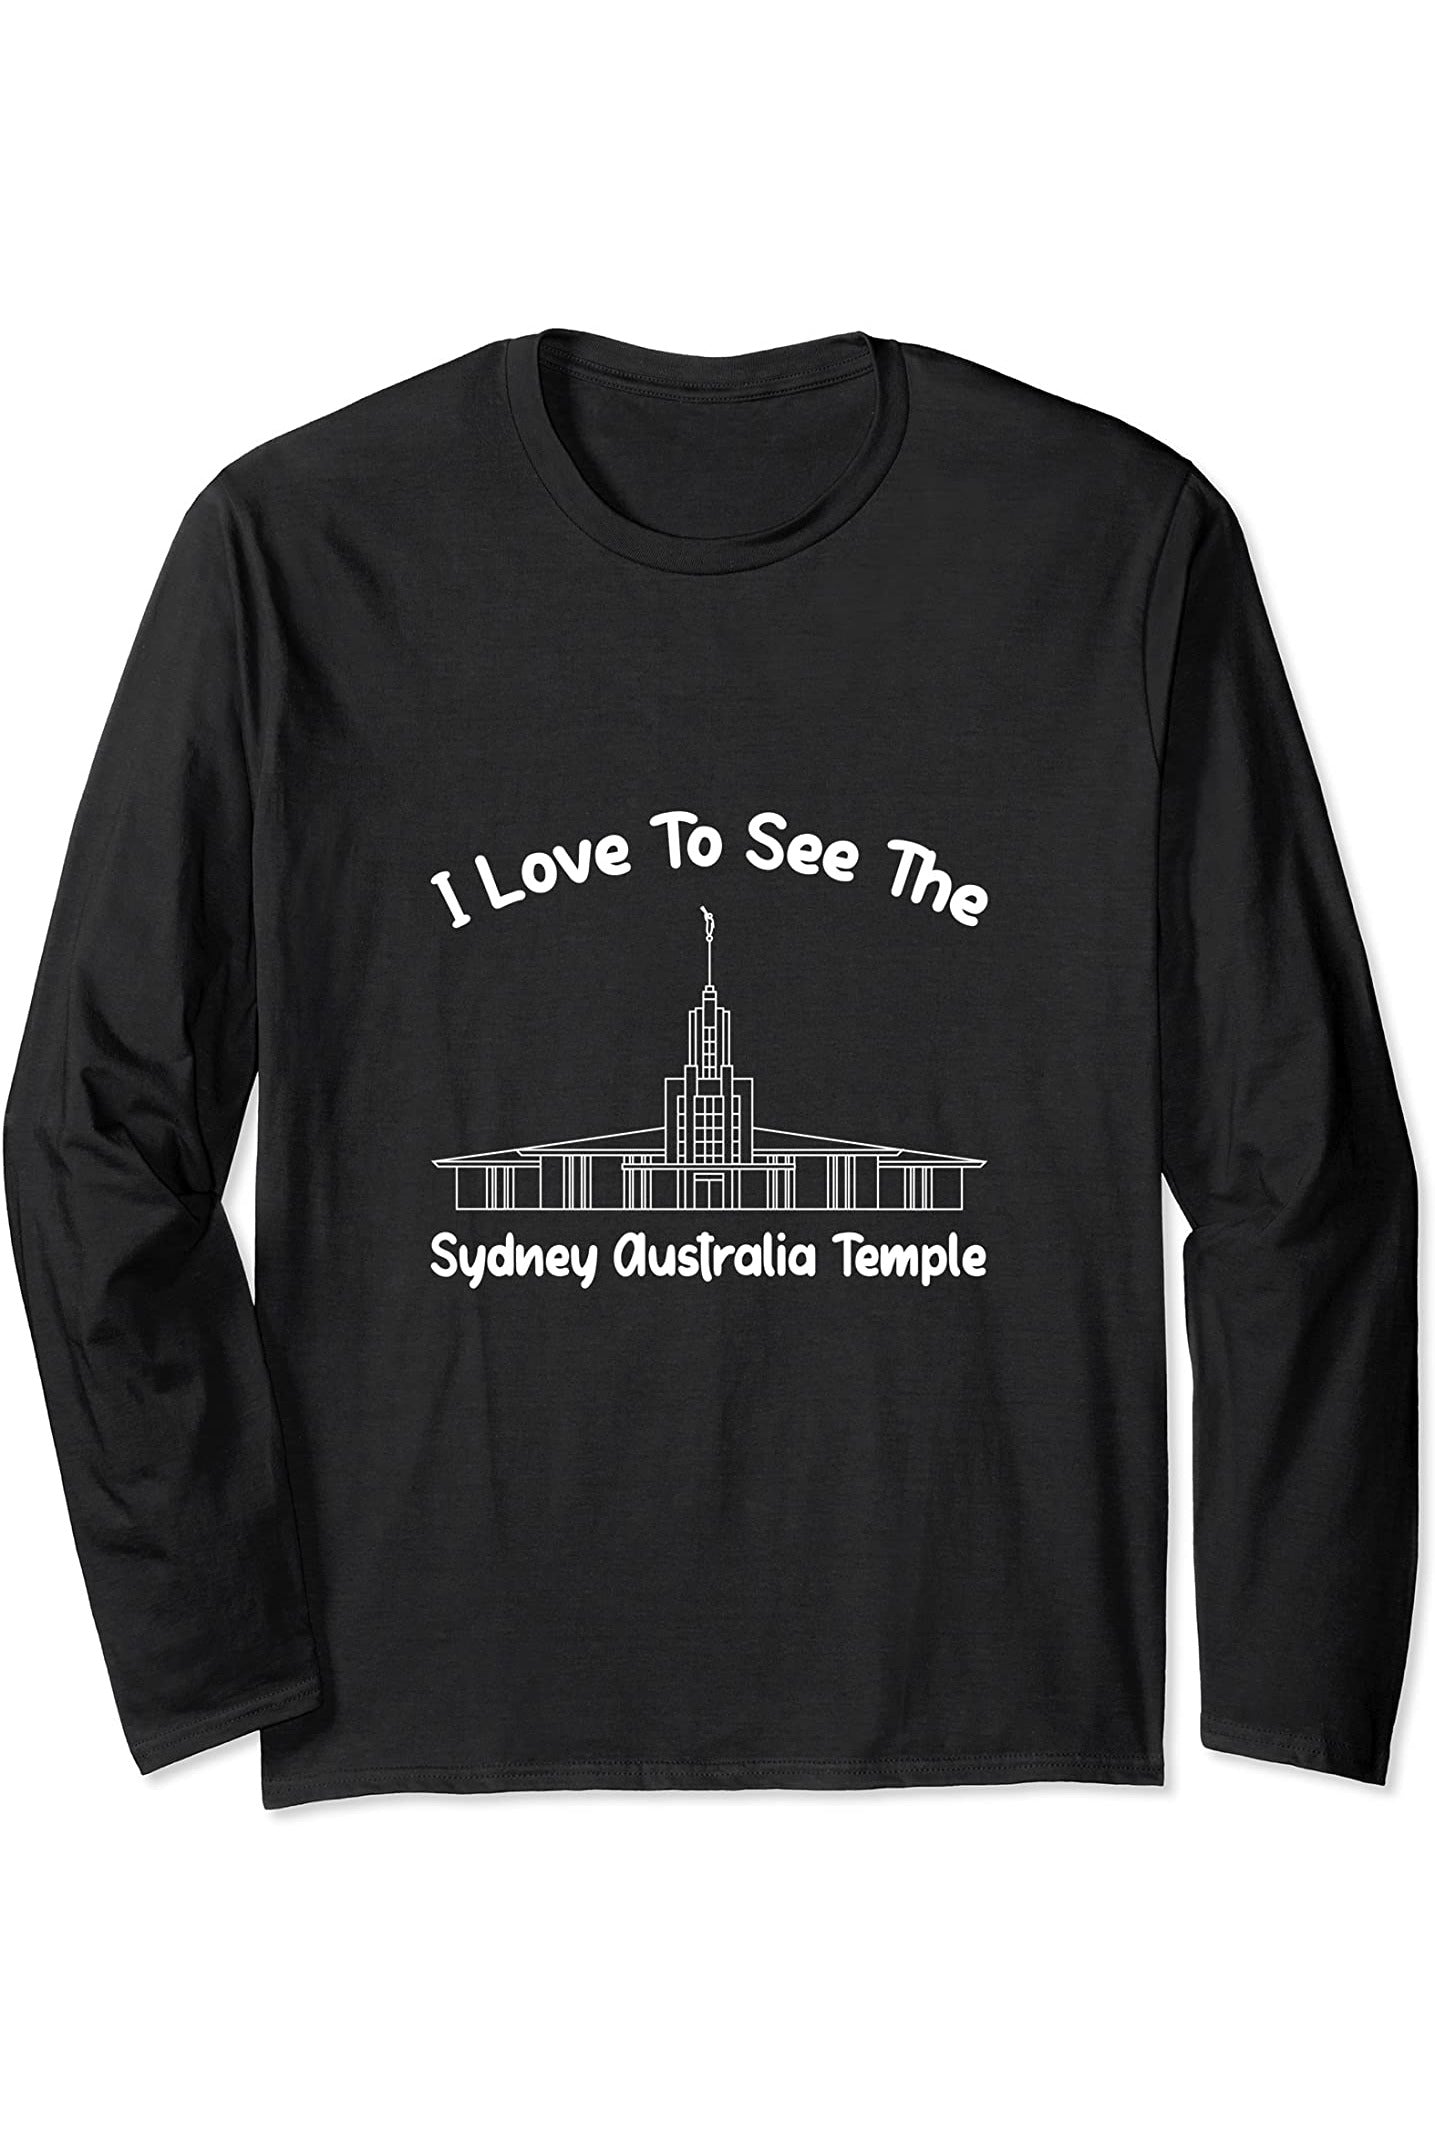 Sydney Australia Temple Long Sleeve T-Shirt - Primary Style (English) US